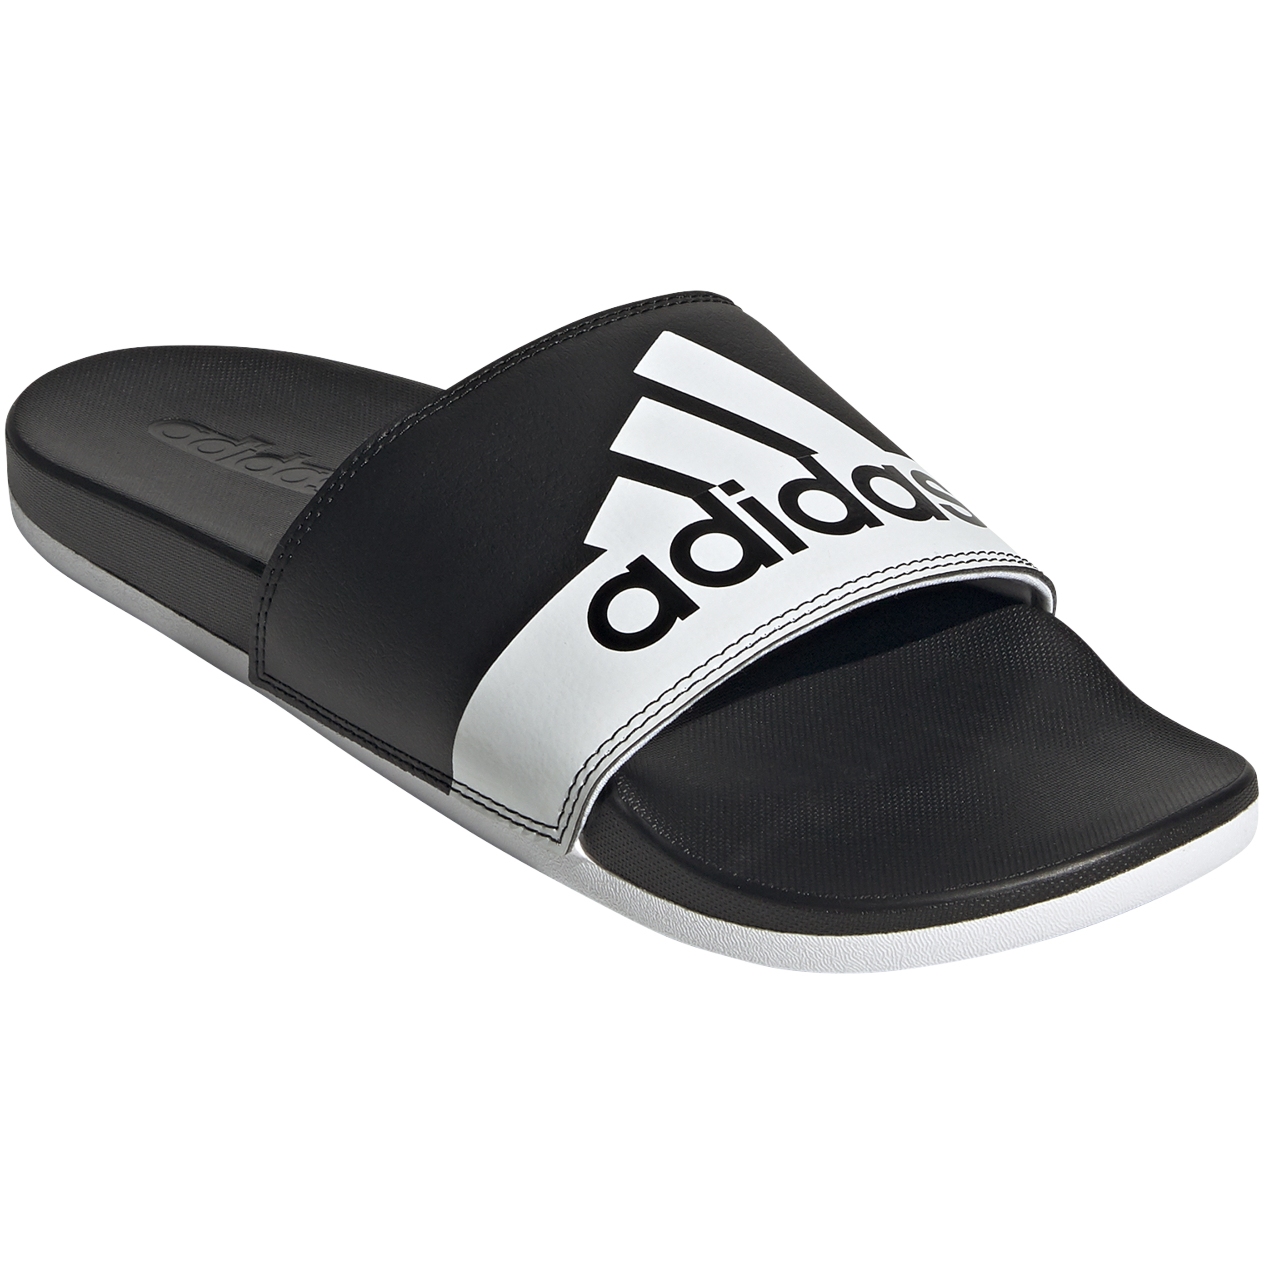 Produktbild von adidas Comfort Adilette Badeschuhe - core black/weiss/weiss GV9712